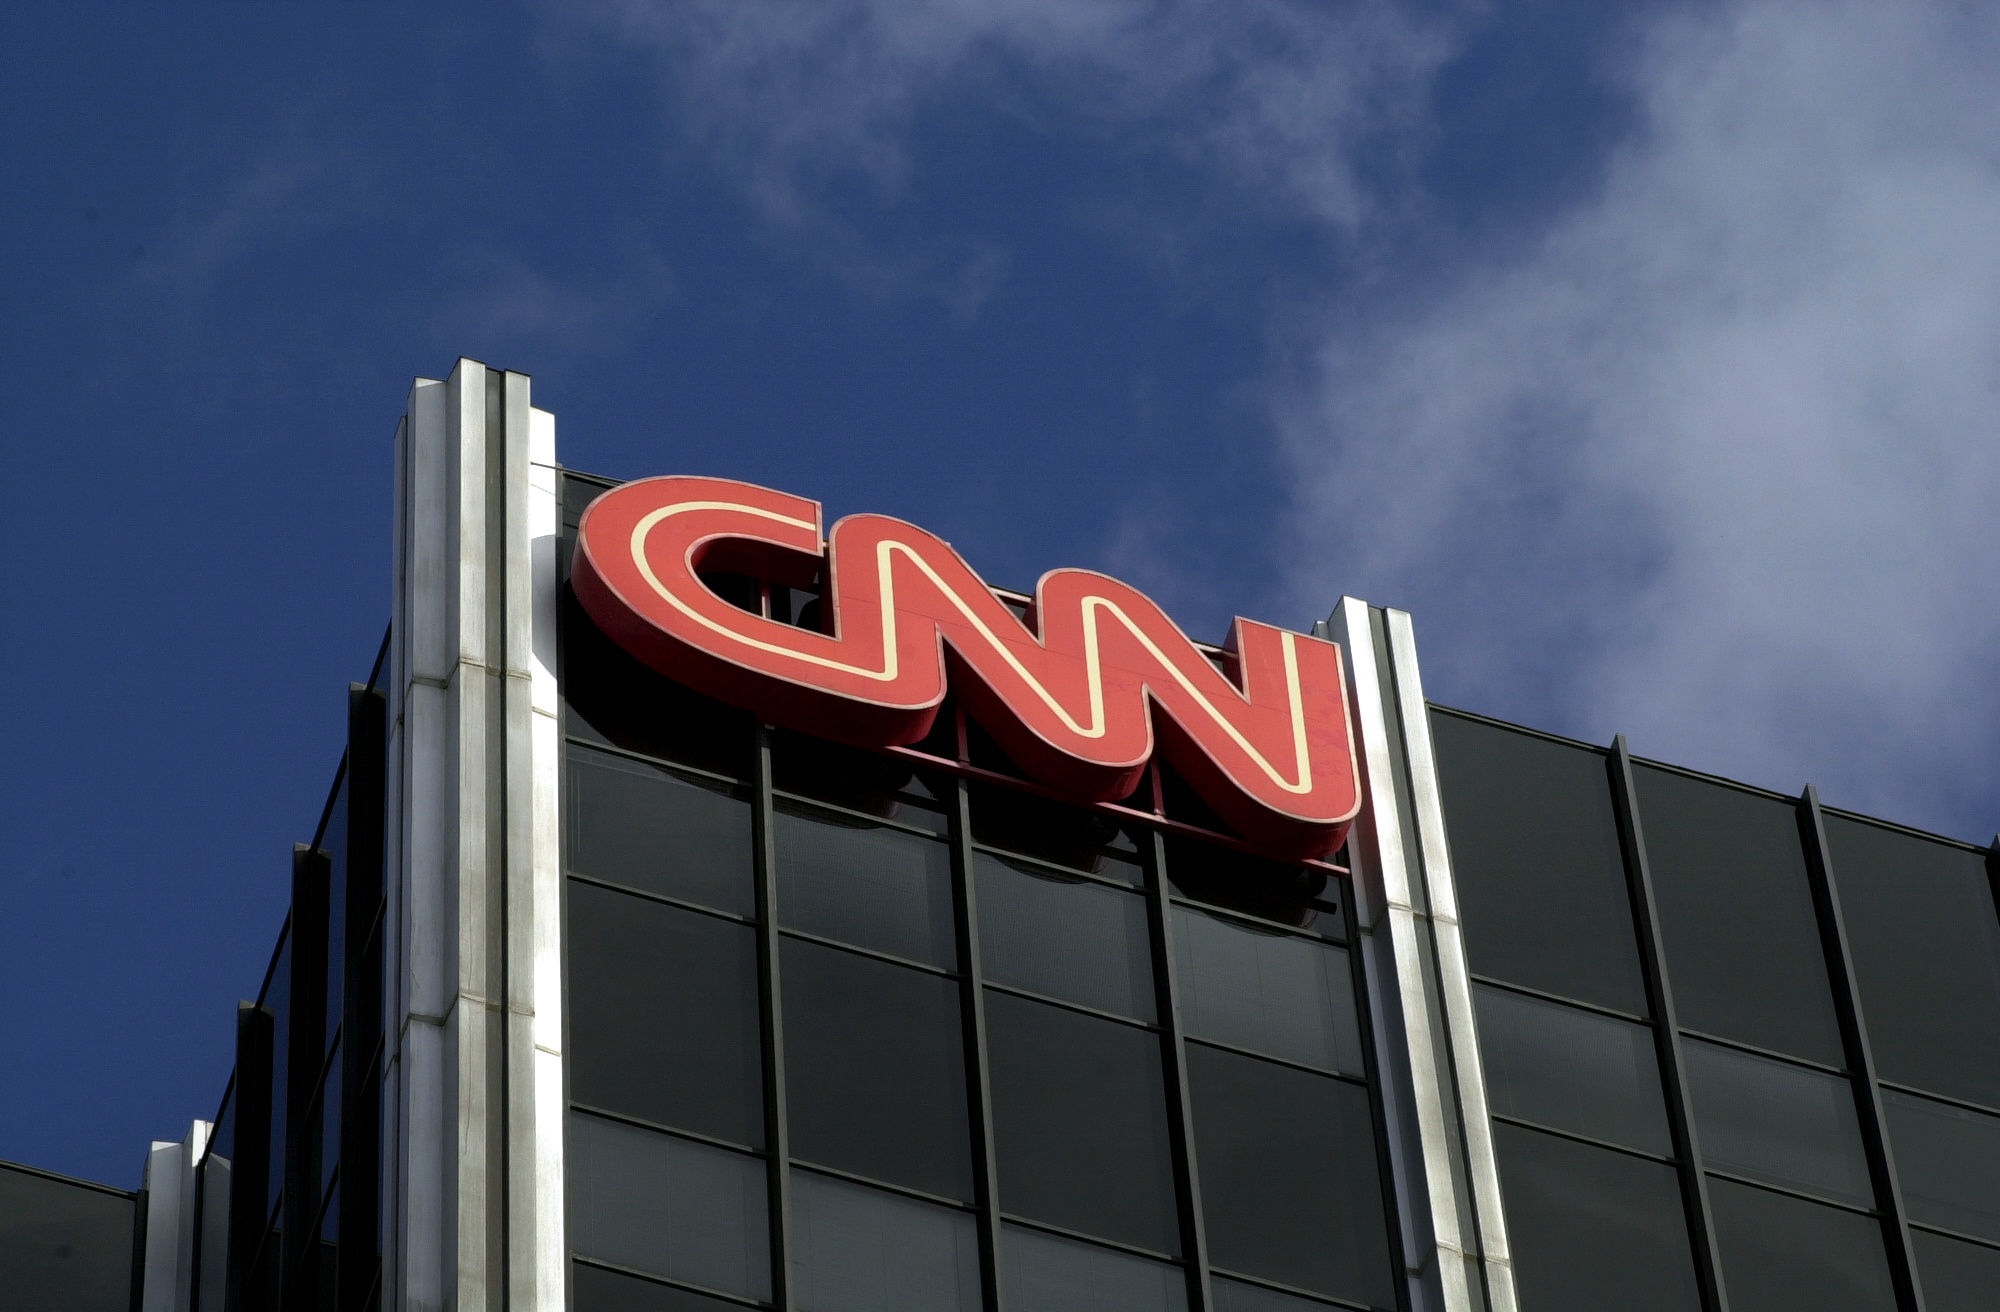 Man arrested for threatening CNN